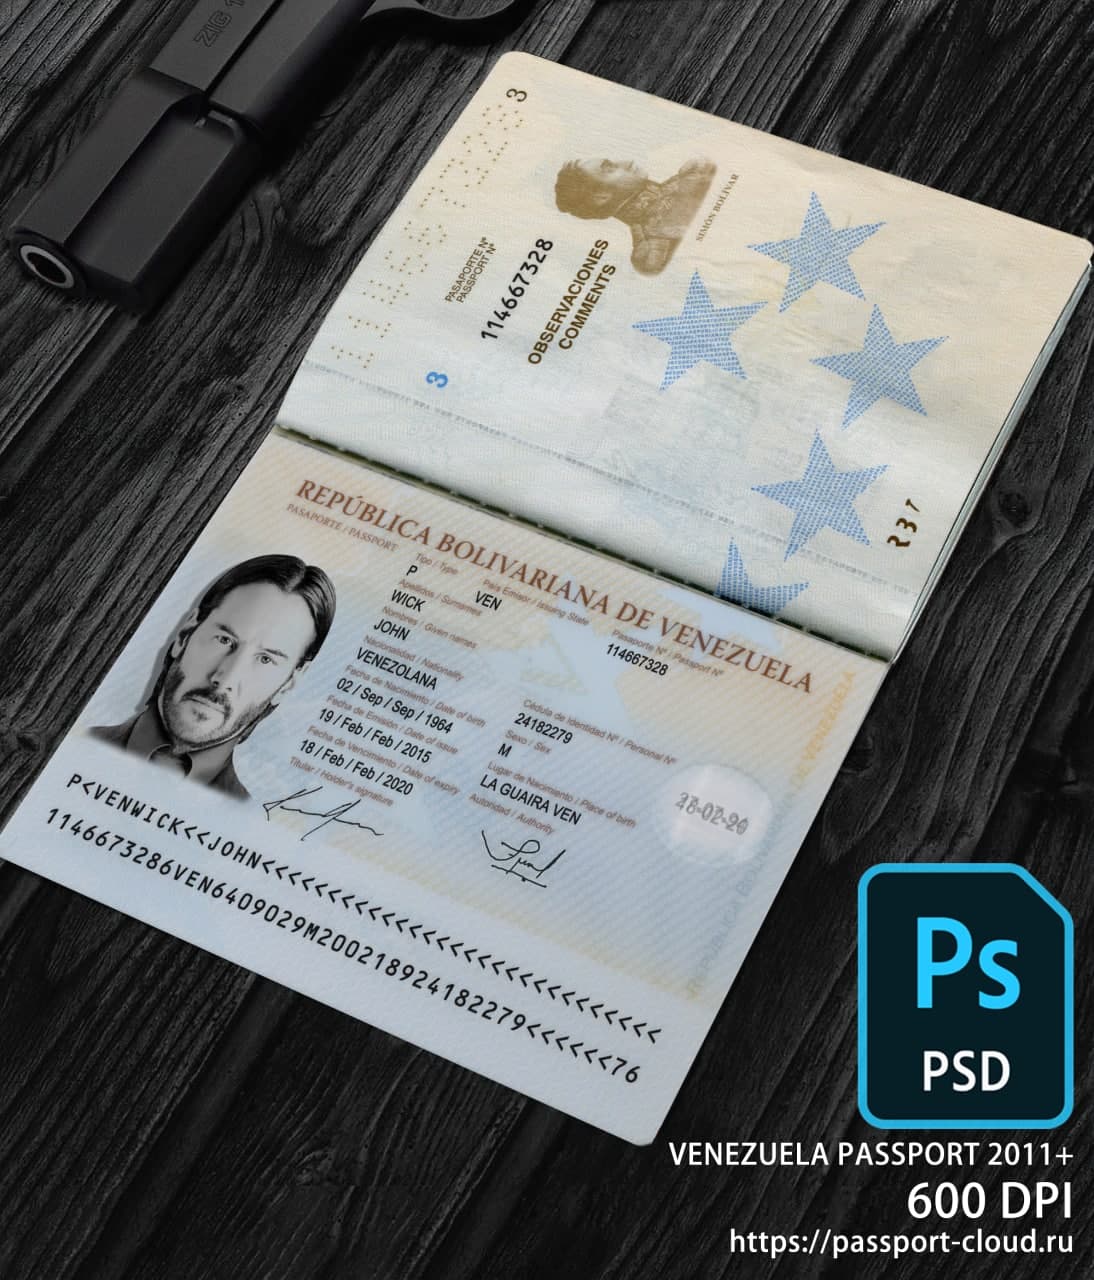 Venezuela Passport 2011+ PSD1